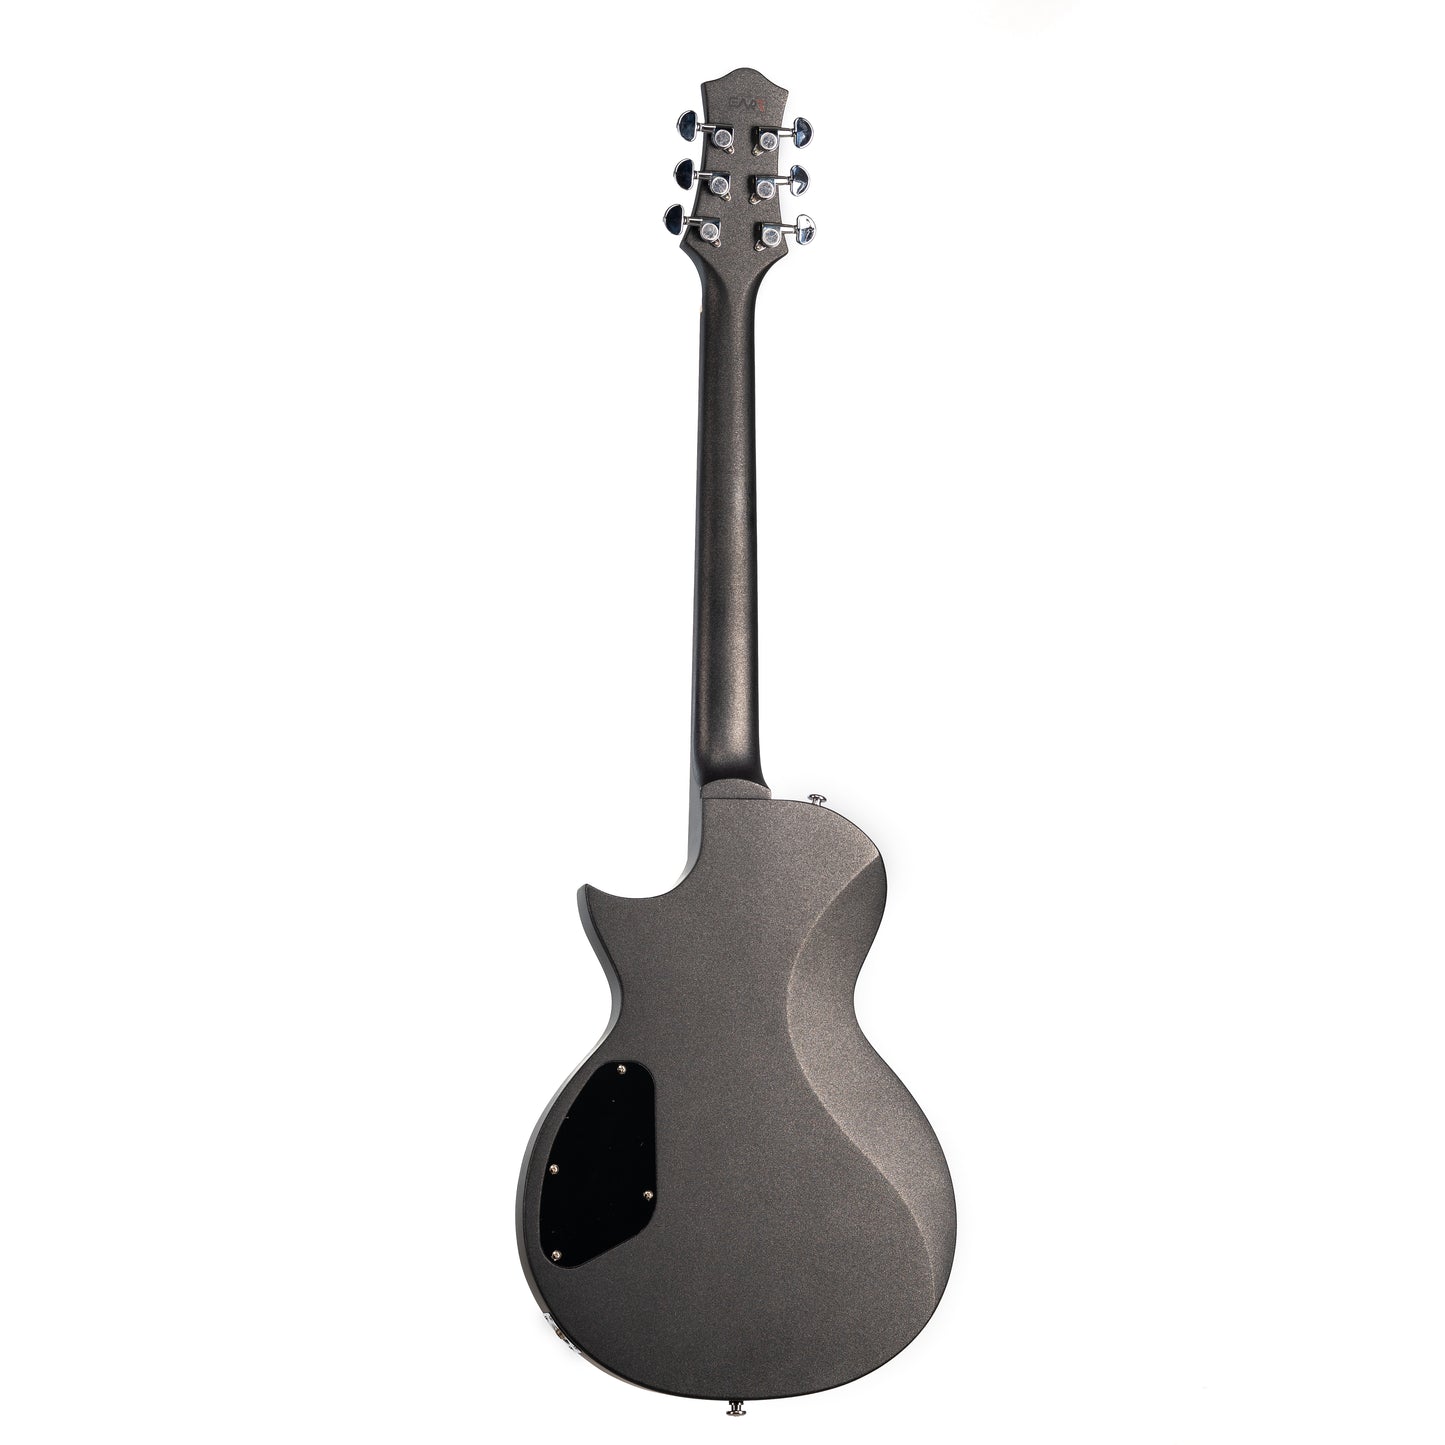 Eart Guitars, EGLP-610, 24.75" Thin Body Roasted Mahogany Electric Guitar, Gunmetal Black